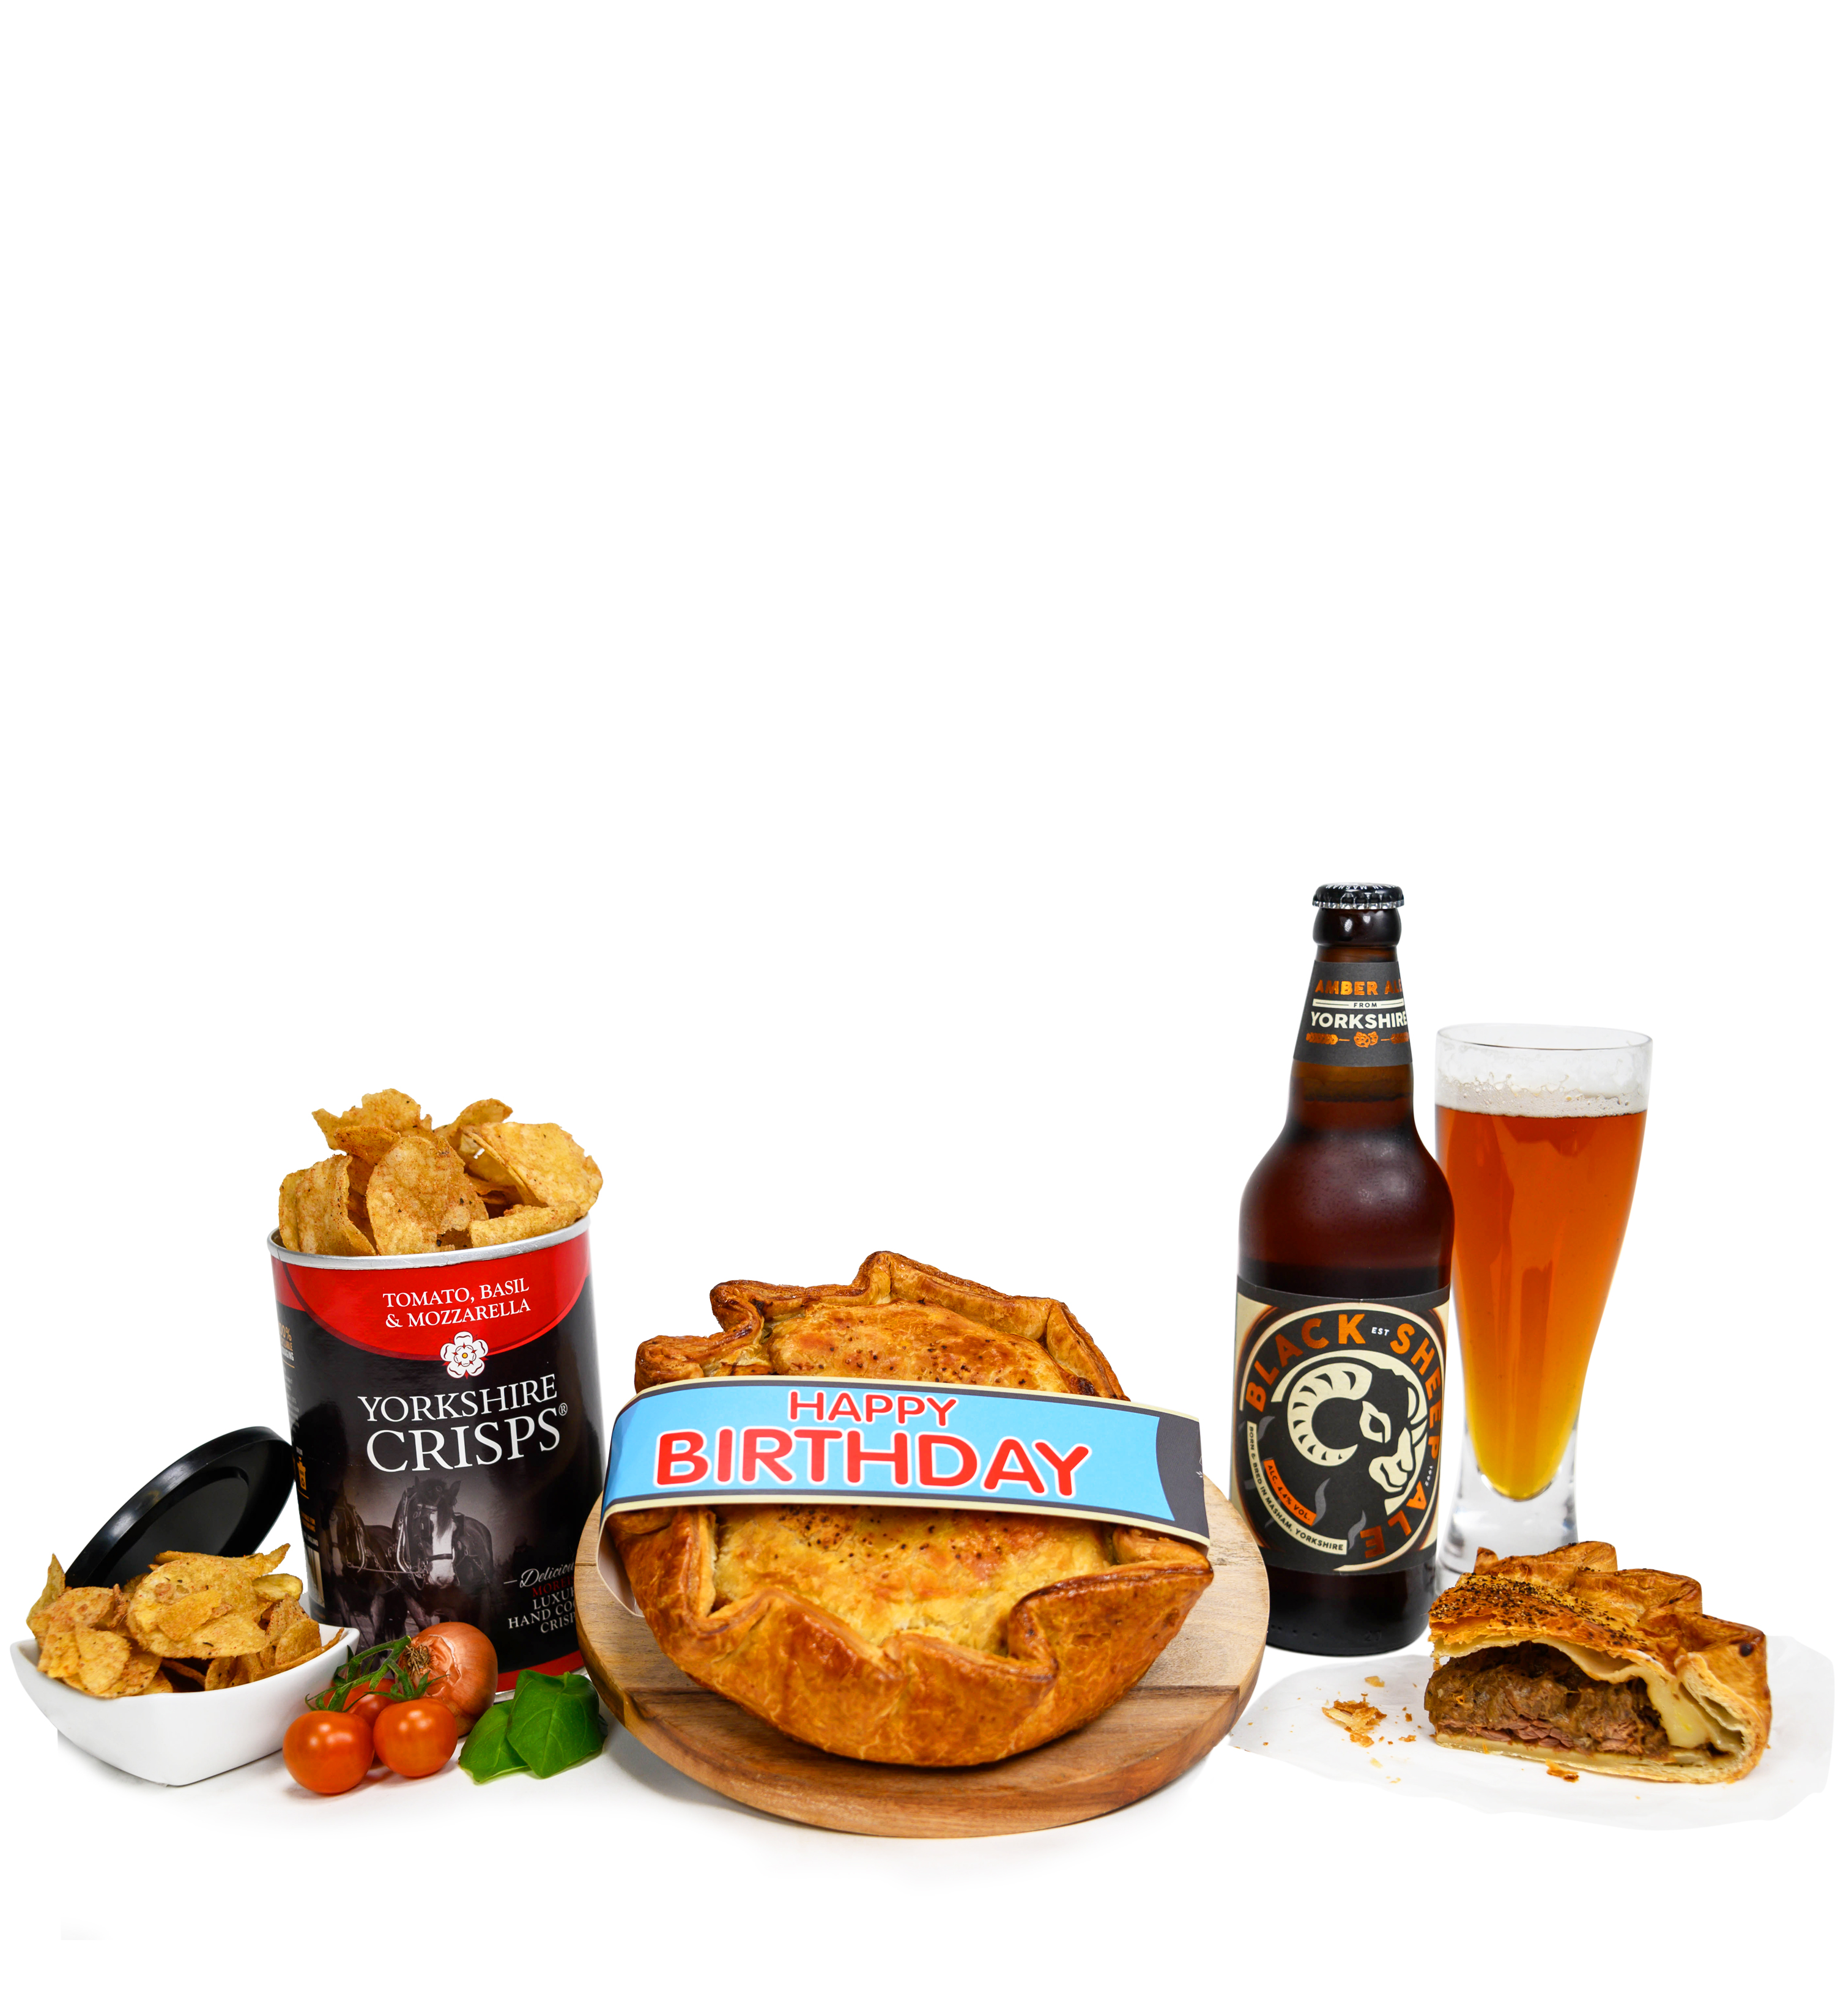 Happy Birthday BeerandPie!